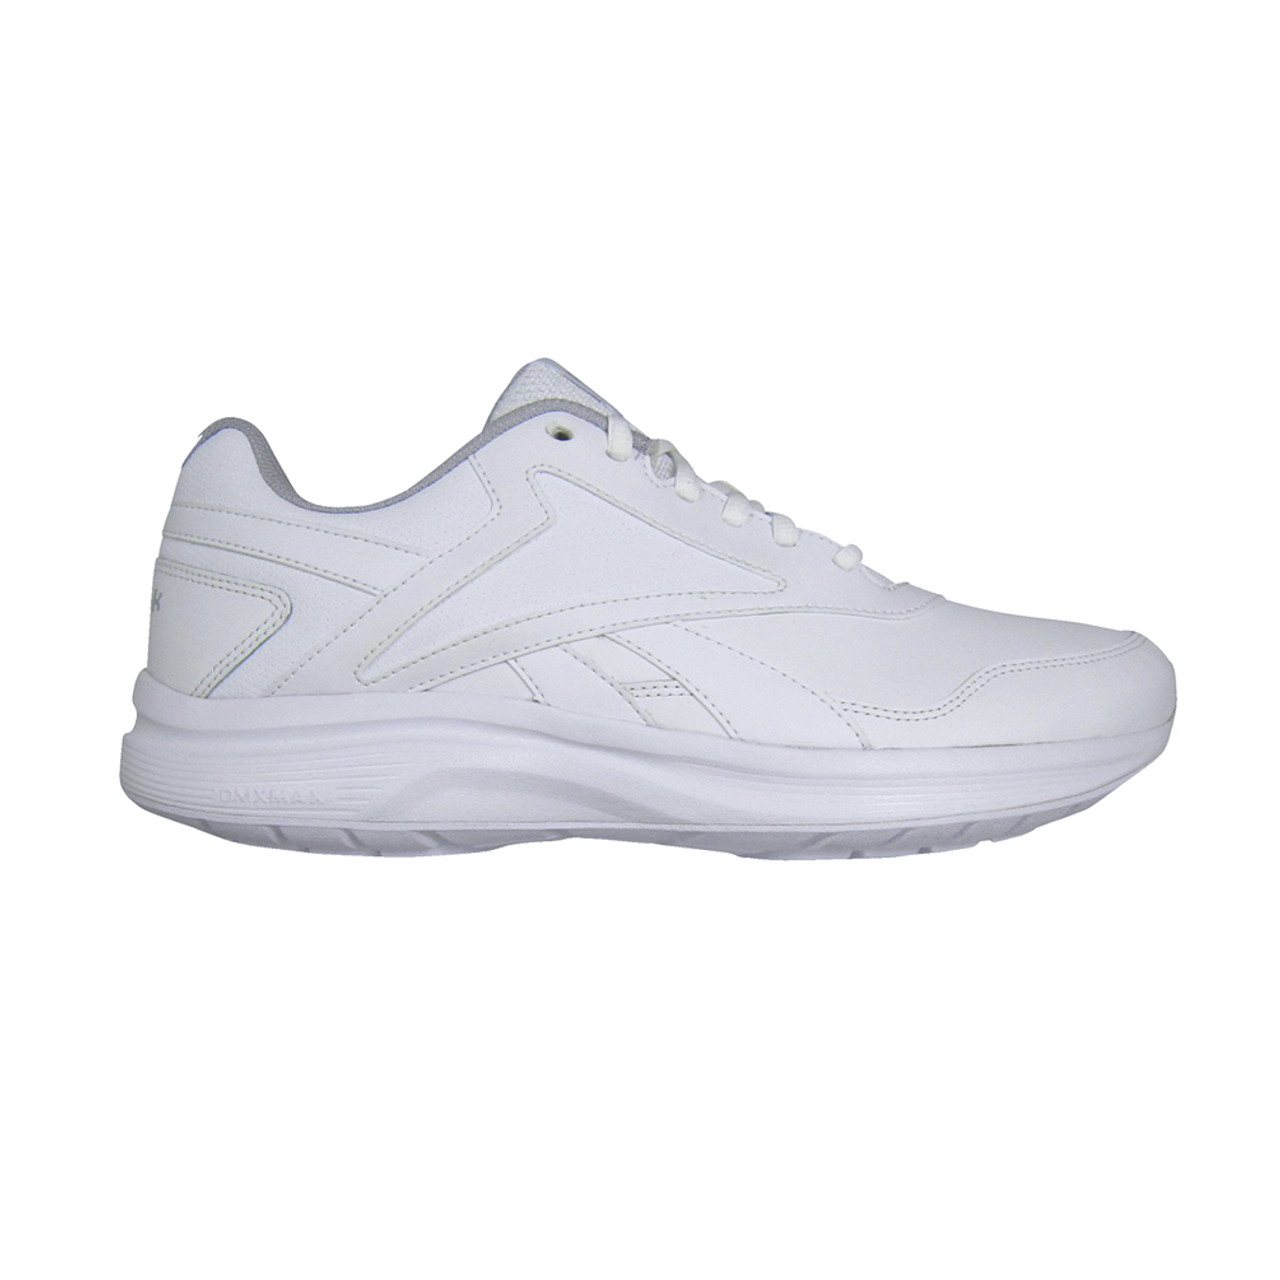 Reebok Men's Walk Ultra 7 Max Walking Shoes Wide White | Discount Reebok Mens Athletic & More Shoolu.com | Shoolu.com